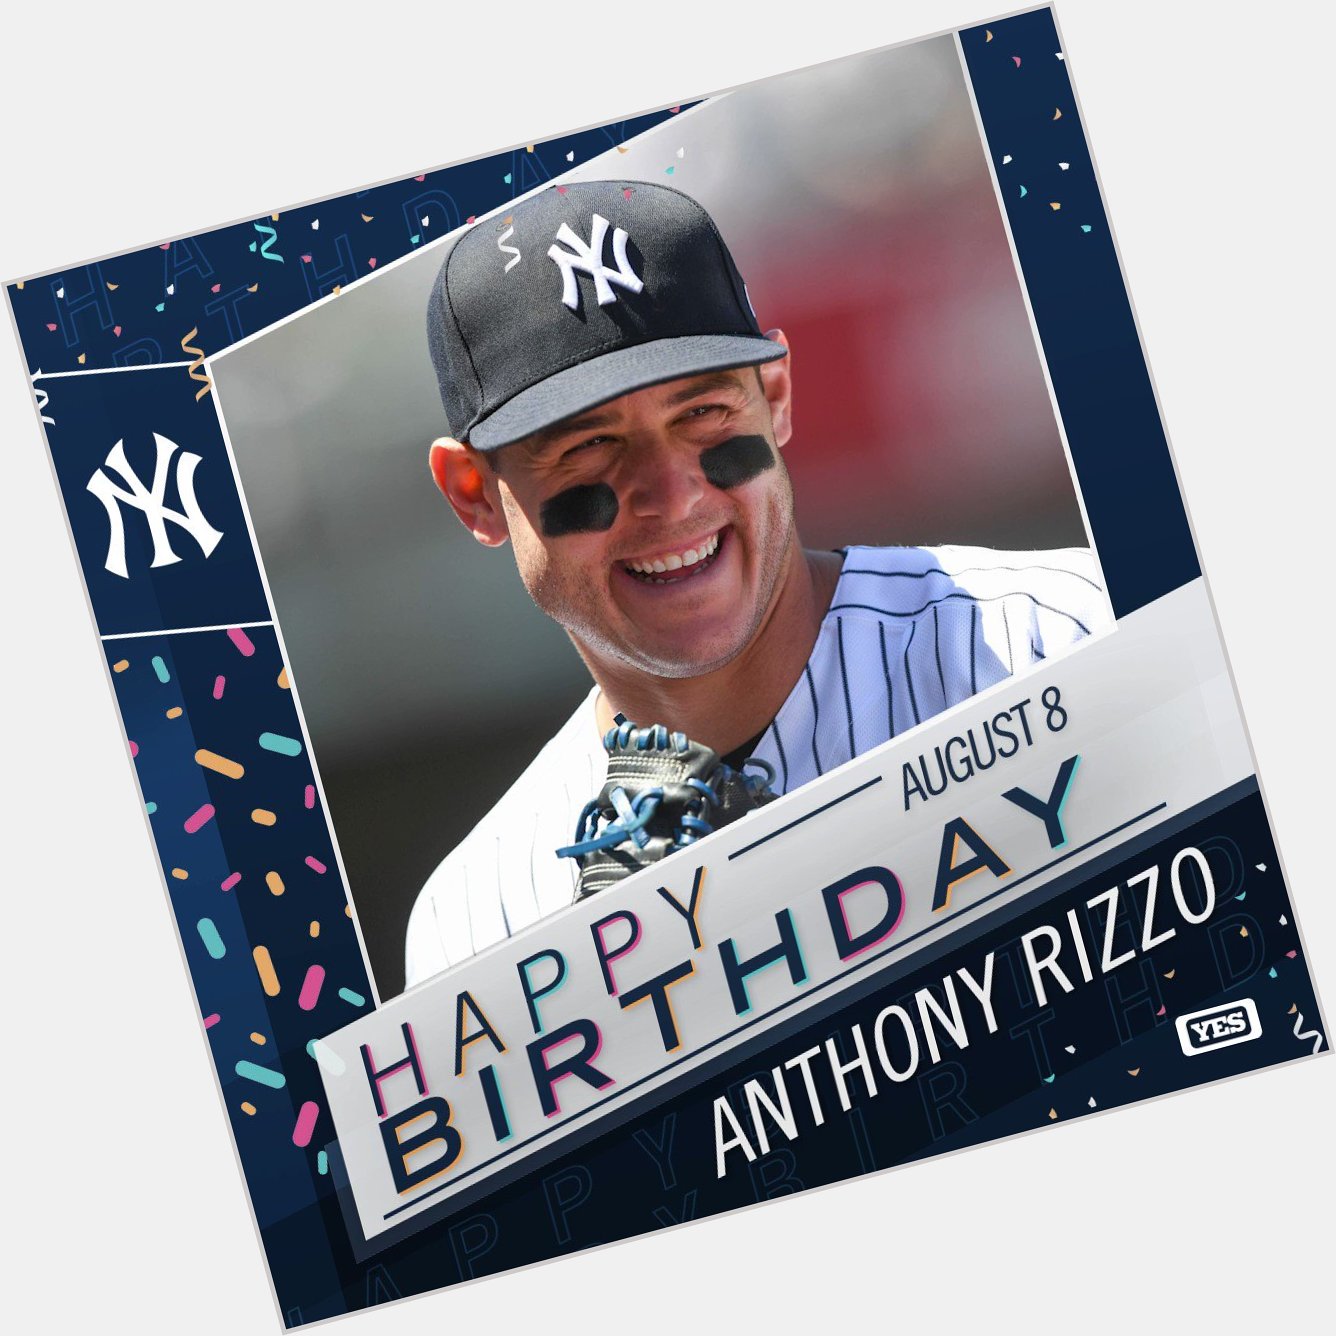 Happy birthday, Anthony Rizzo   